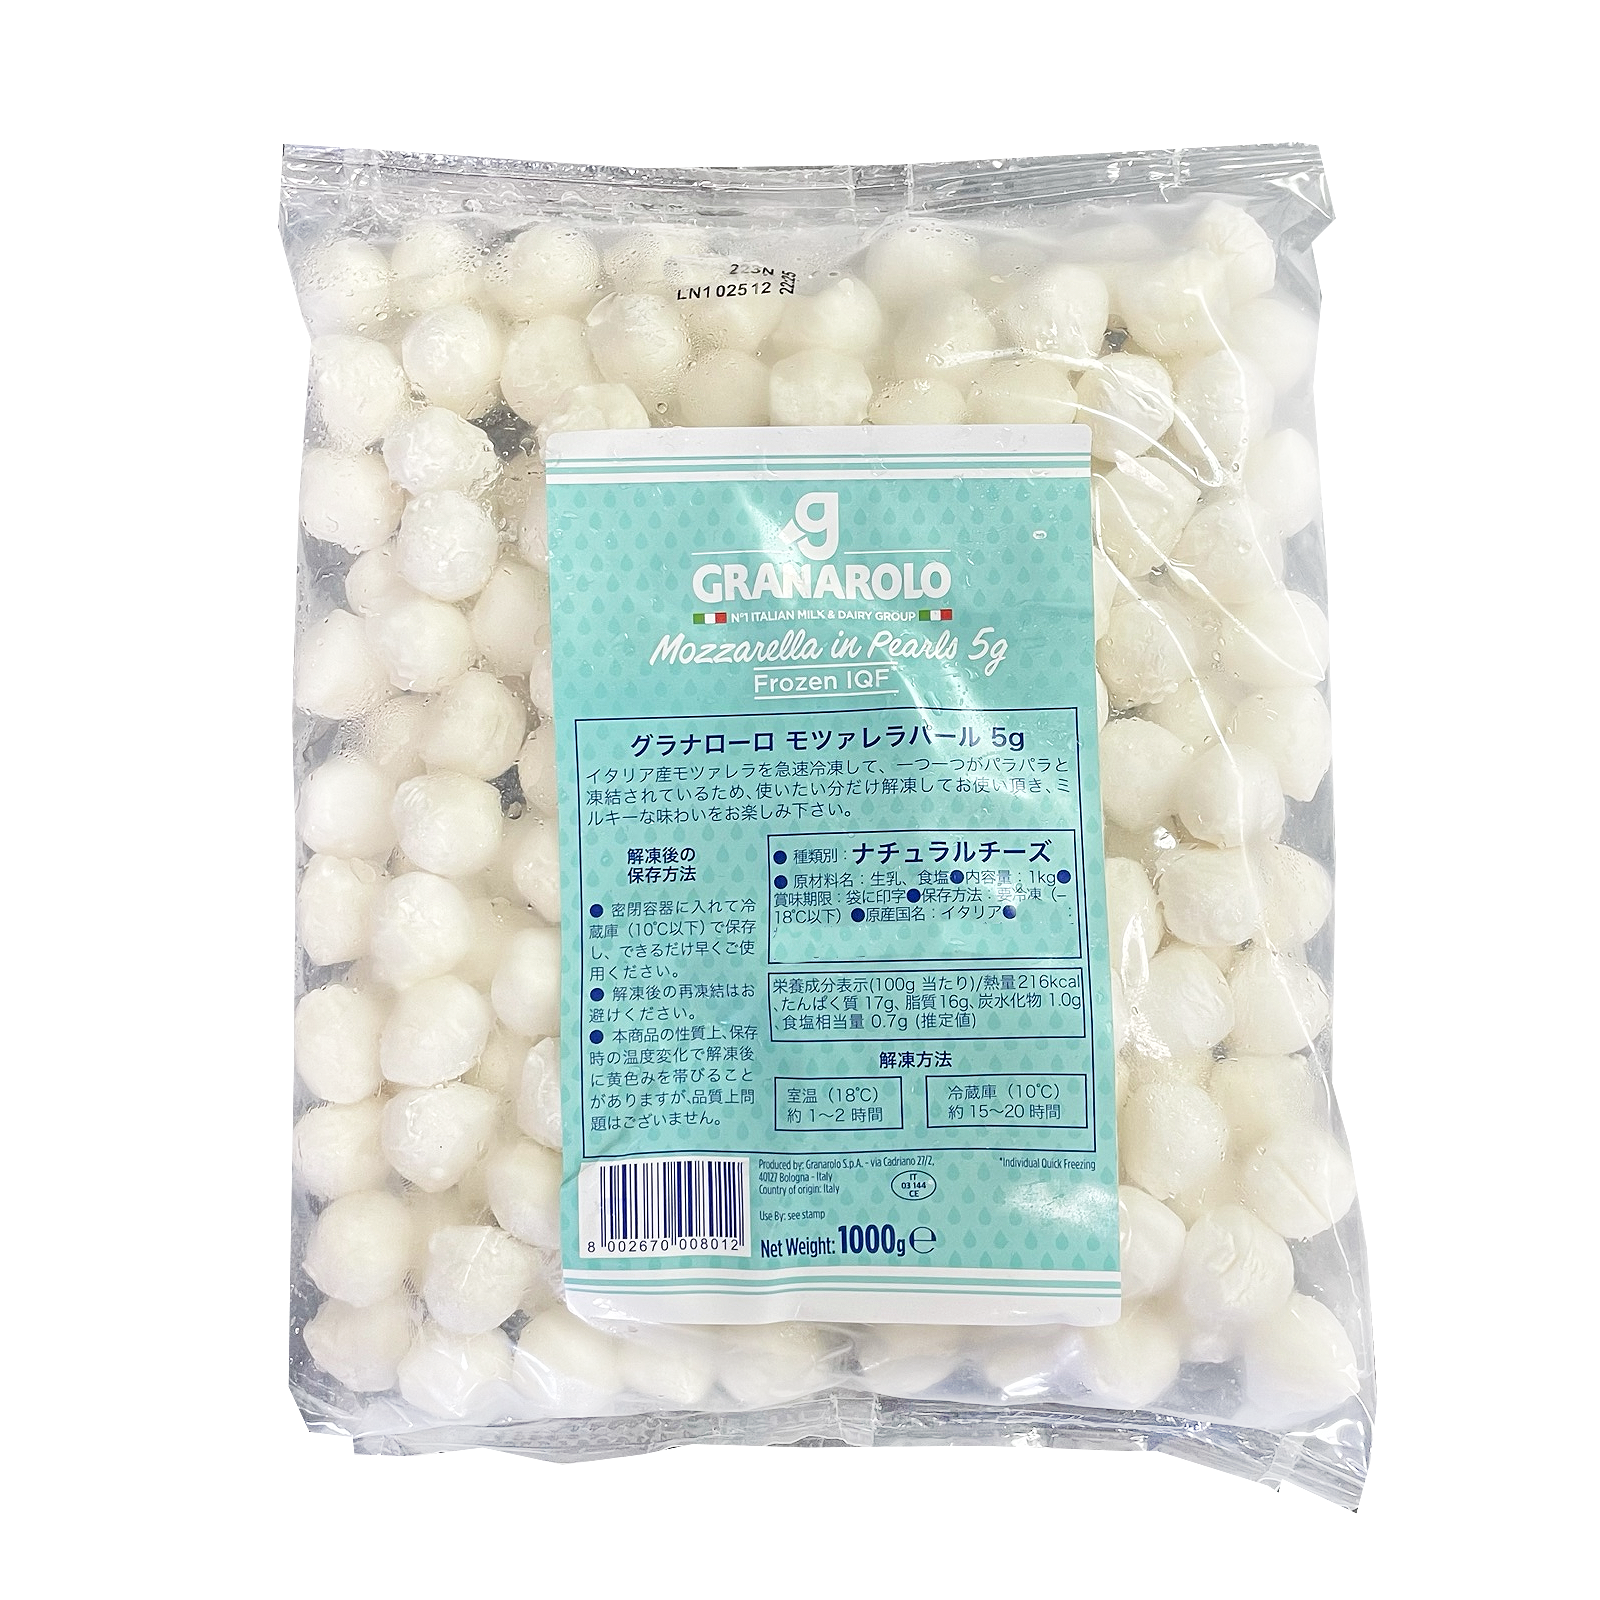 All-Natural Mozzarella Cheese Pearls from Italy (1kg) - Horizon Farms